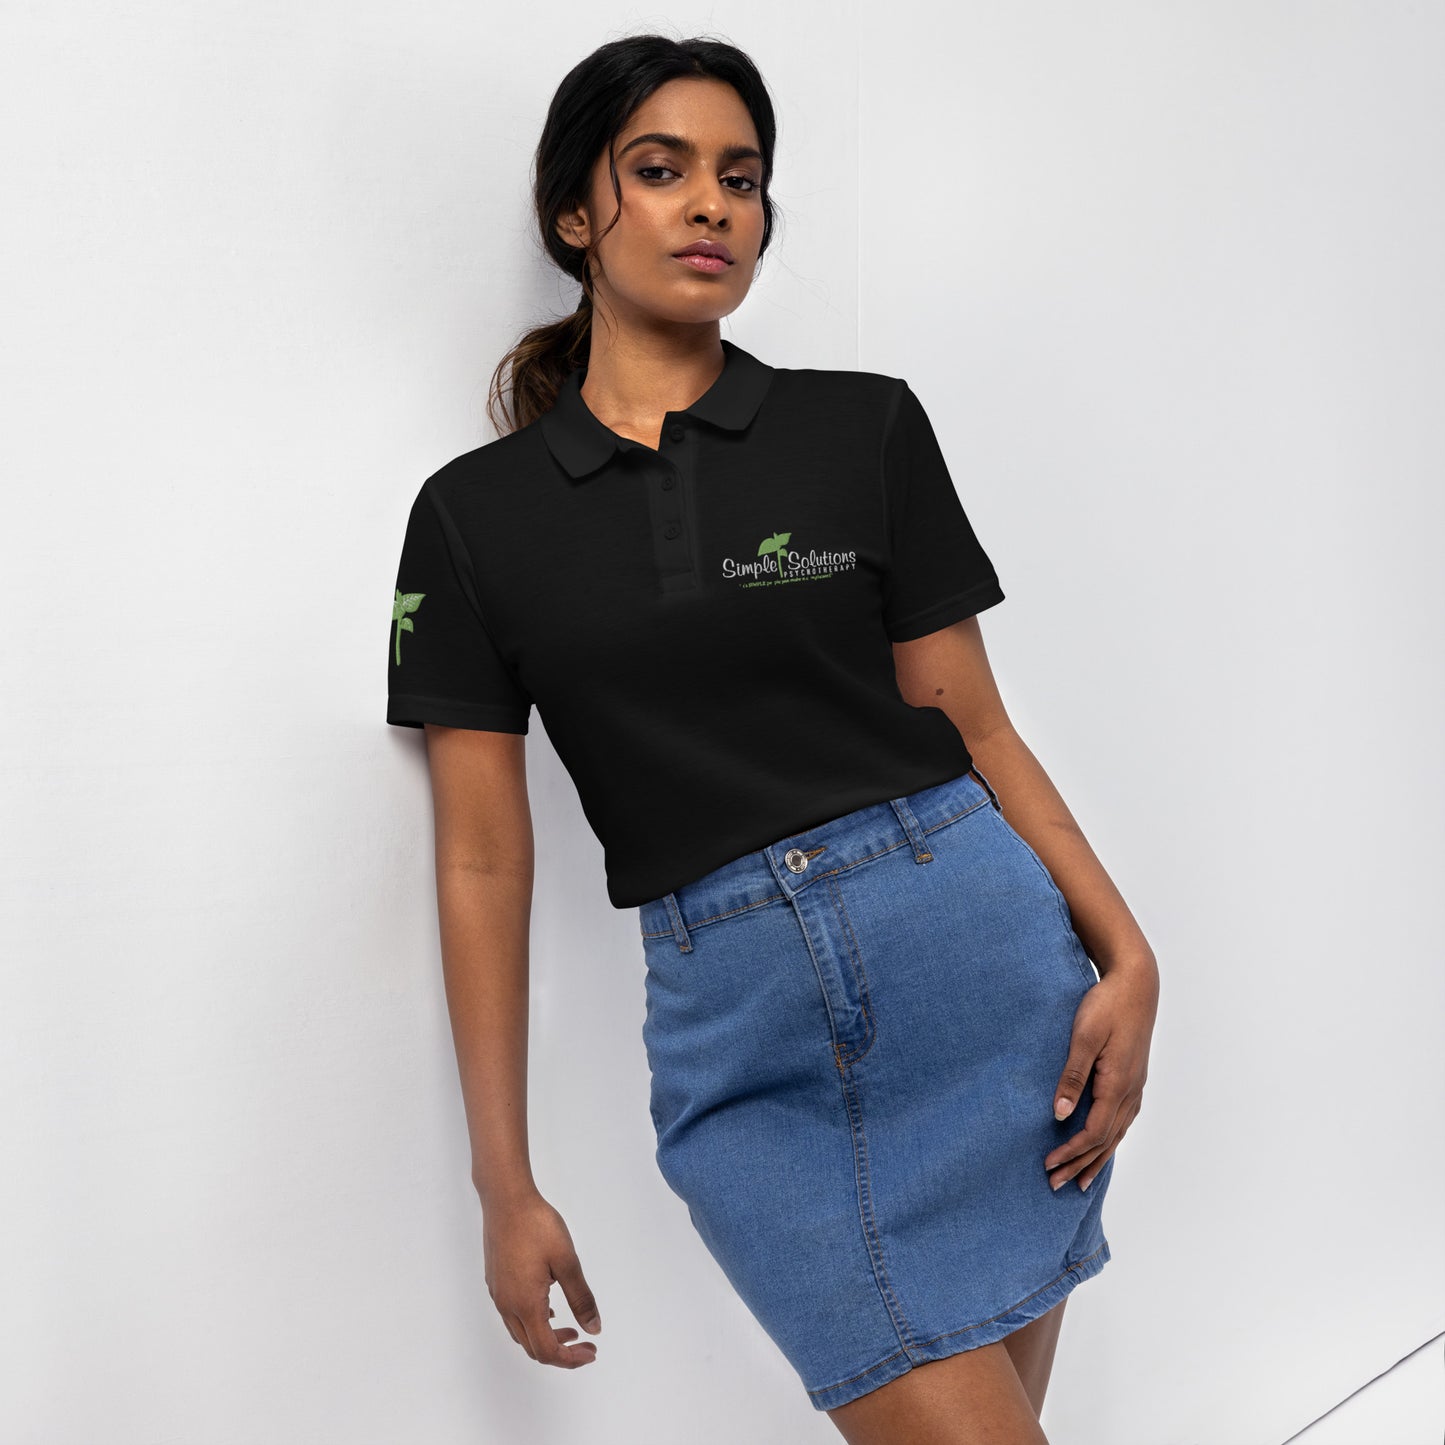 Women’s Simple Solutions pique polo shirt